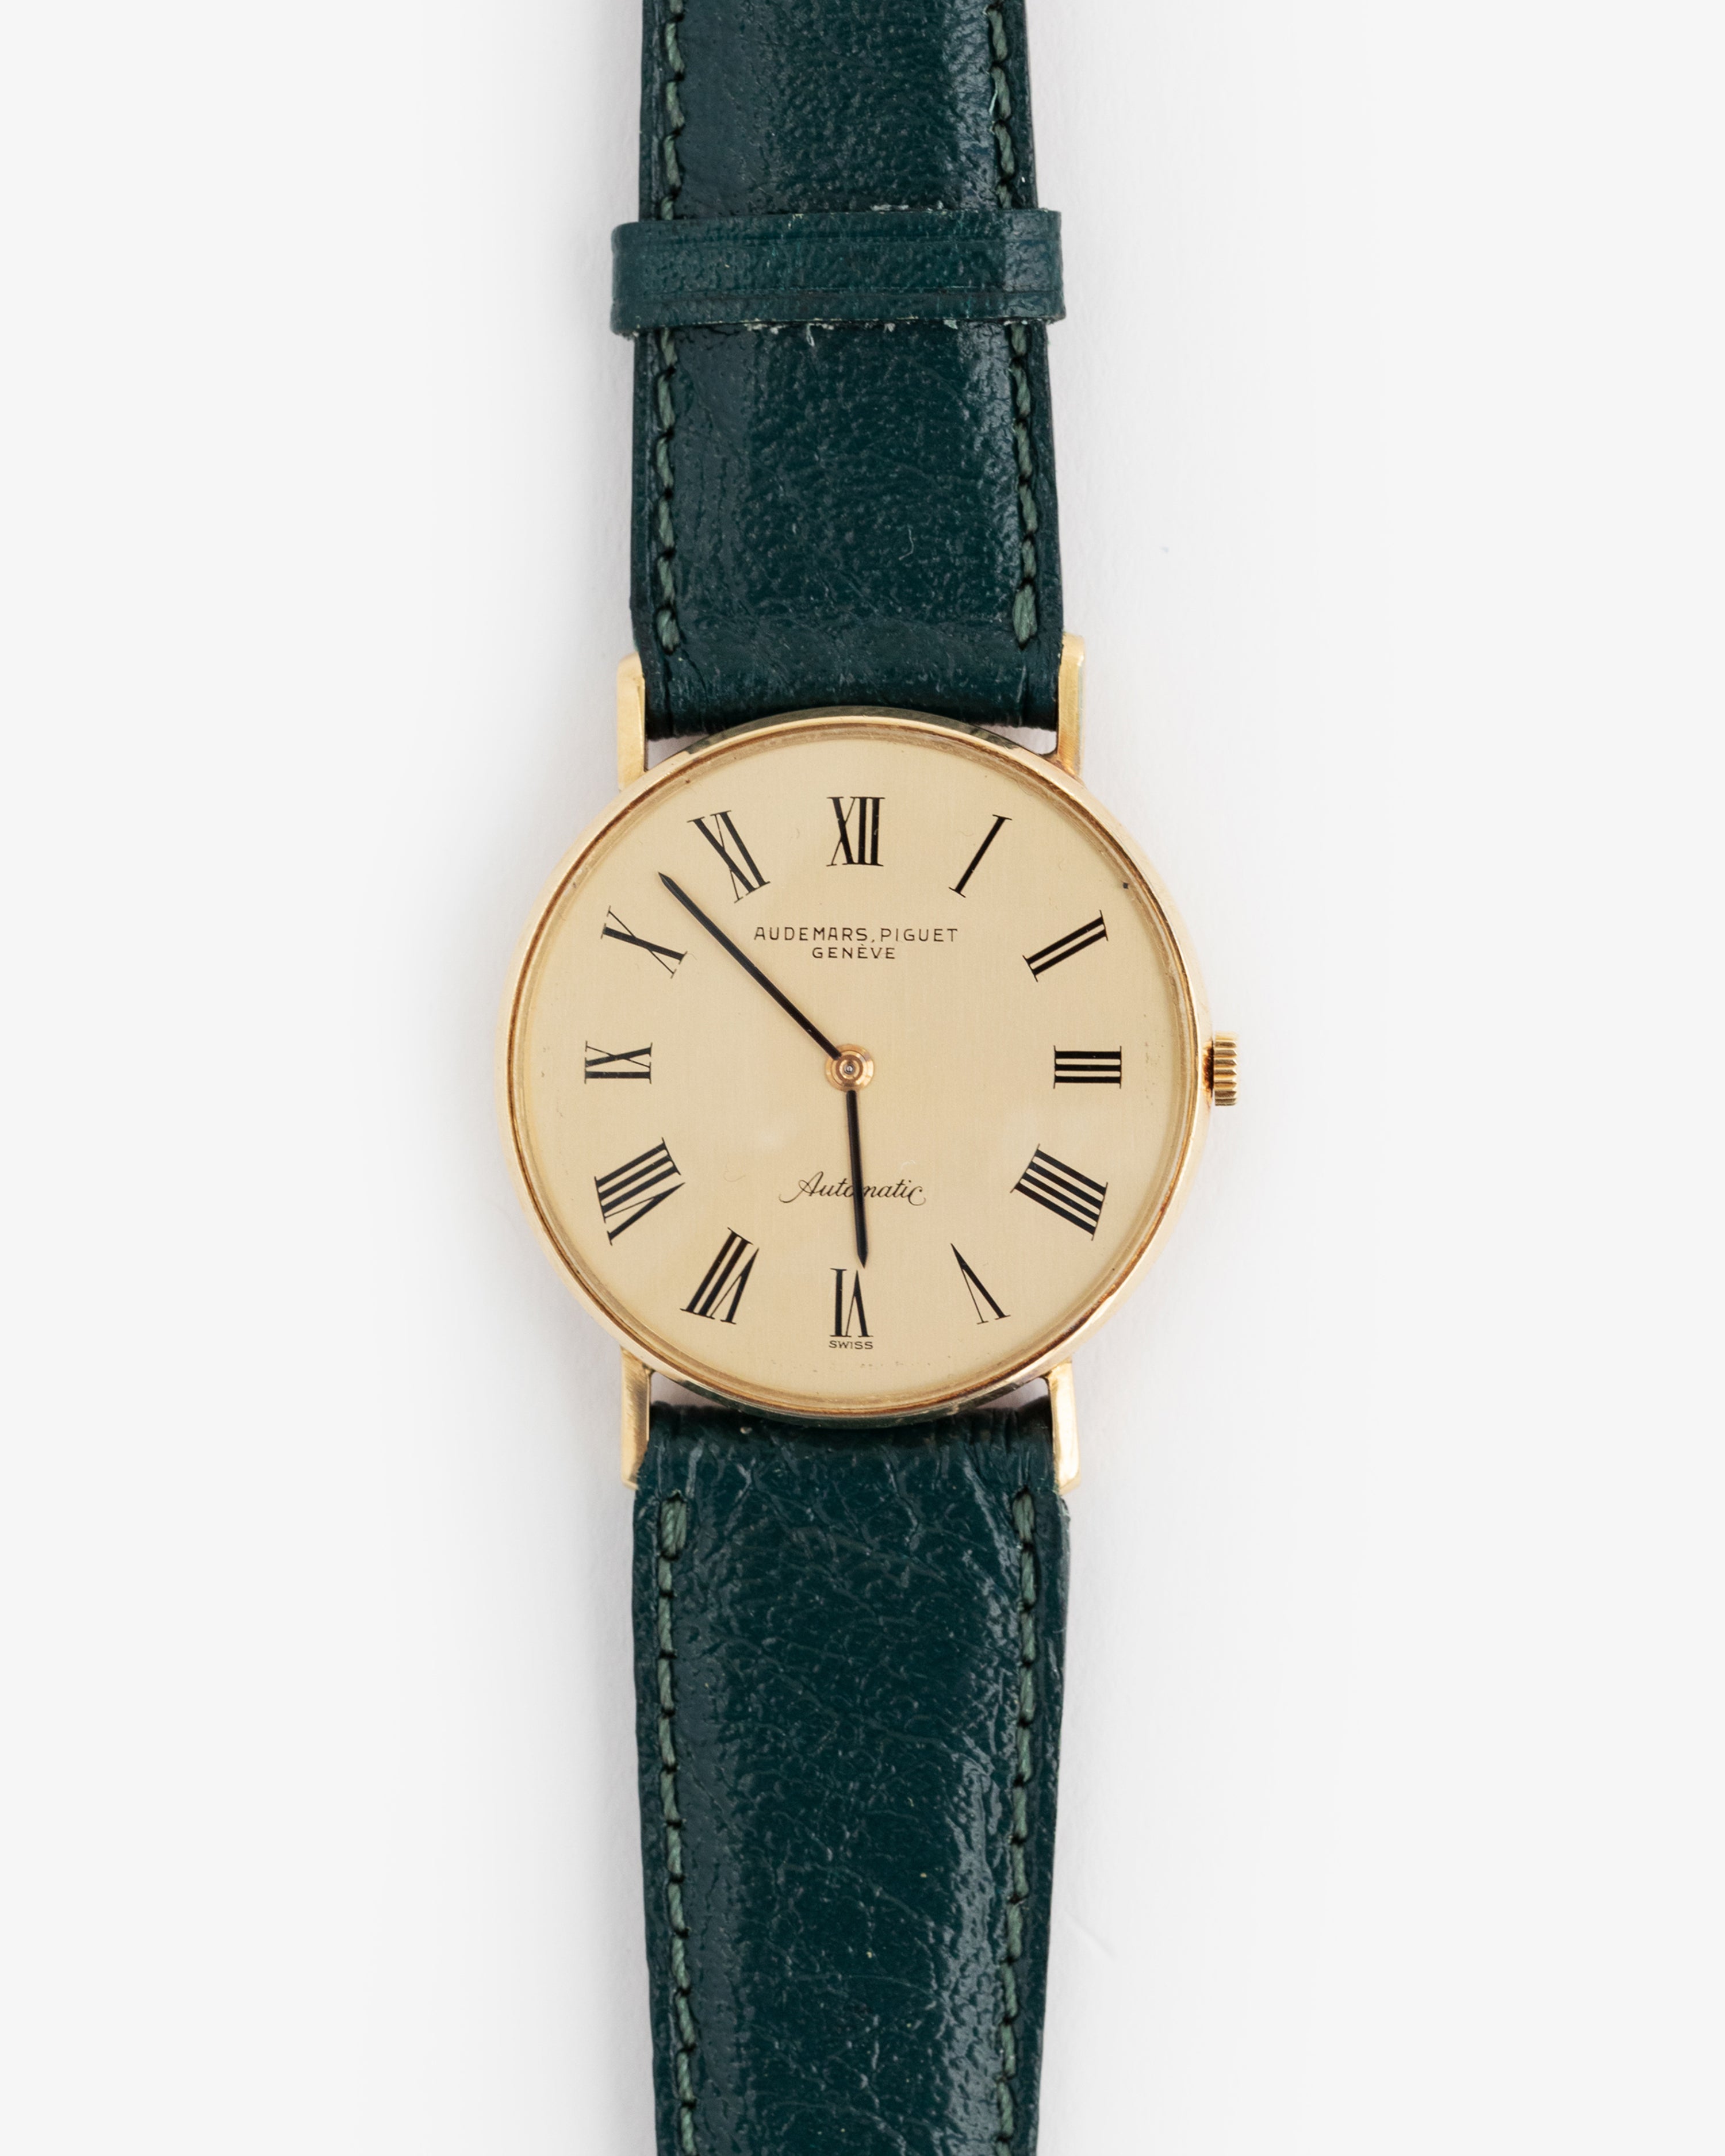 Vintage Audemars Piguet Watch